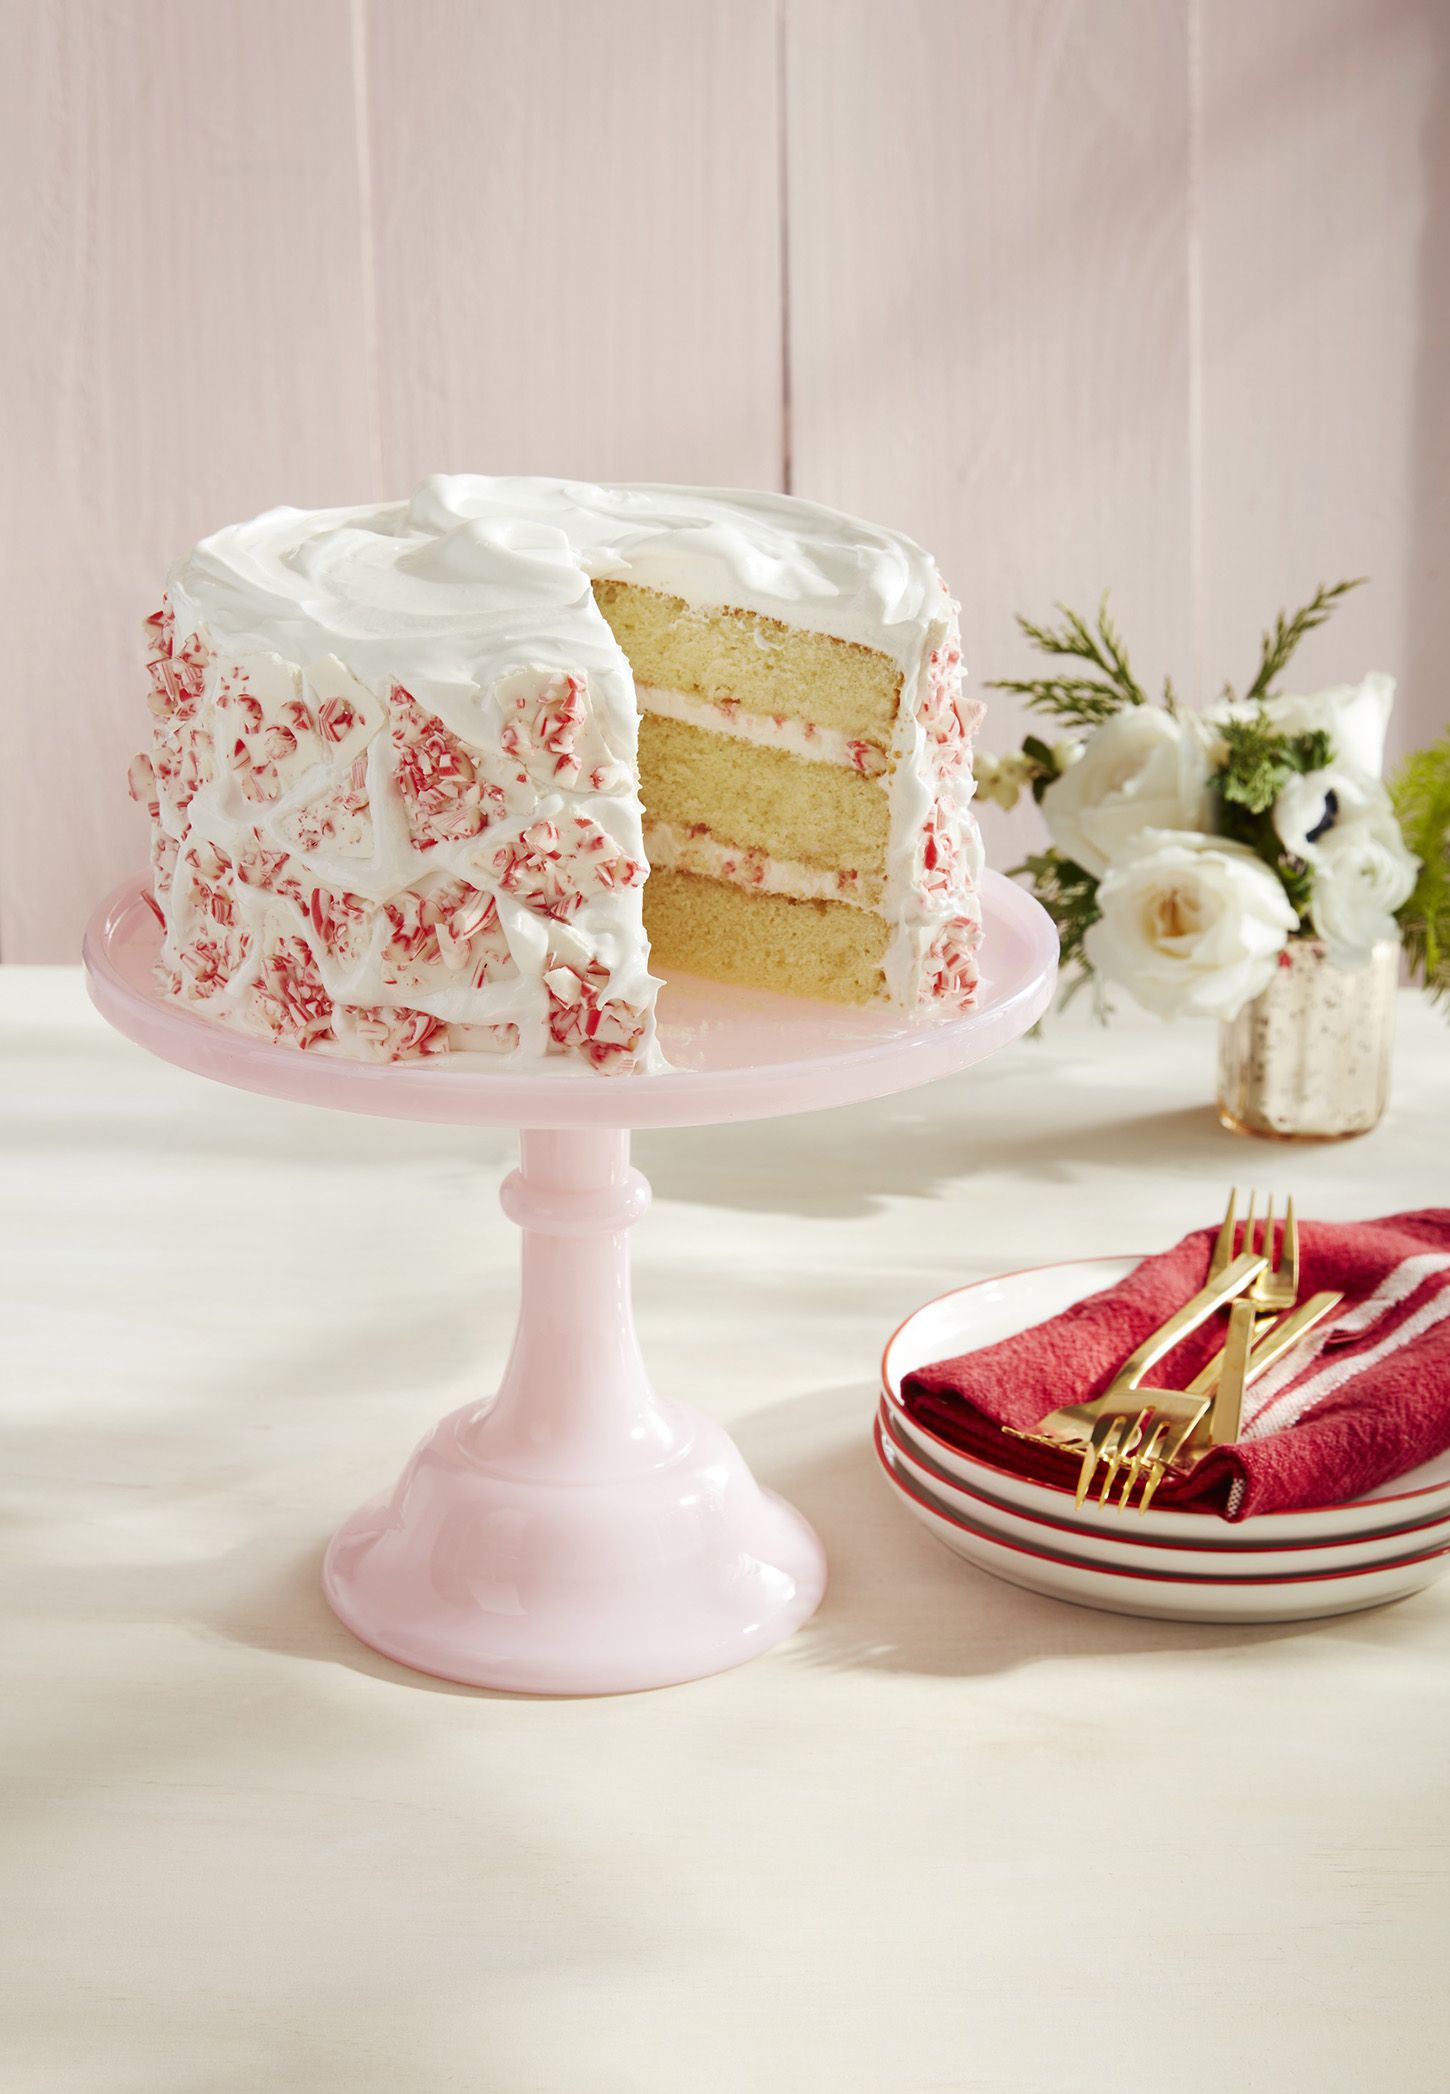 Pretty cake decorating designs we've bookmarked : Twenty One Birthday Cake